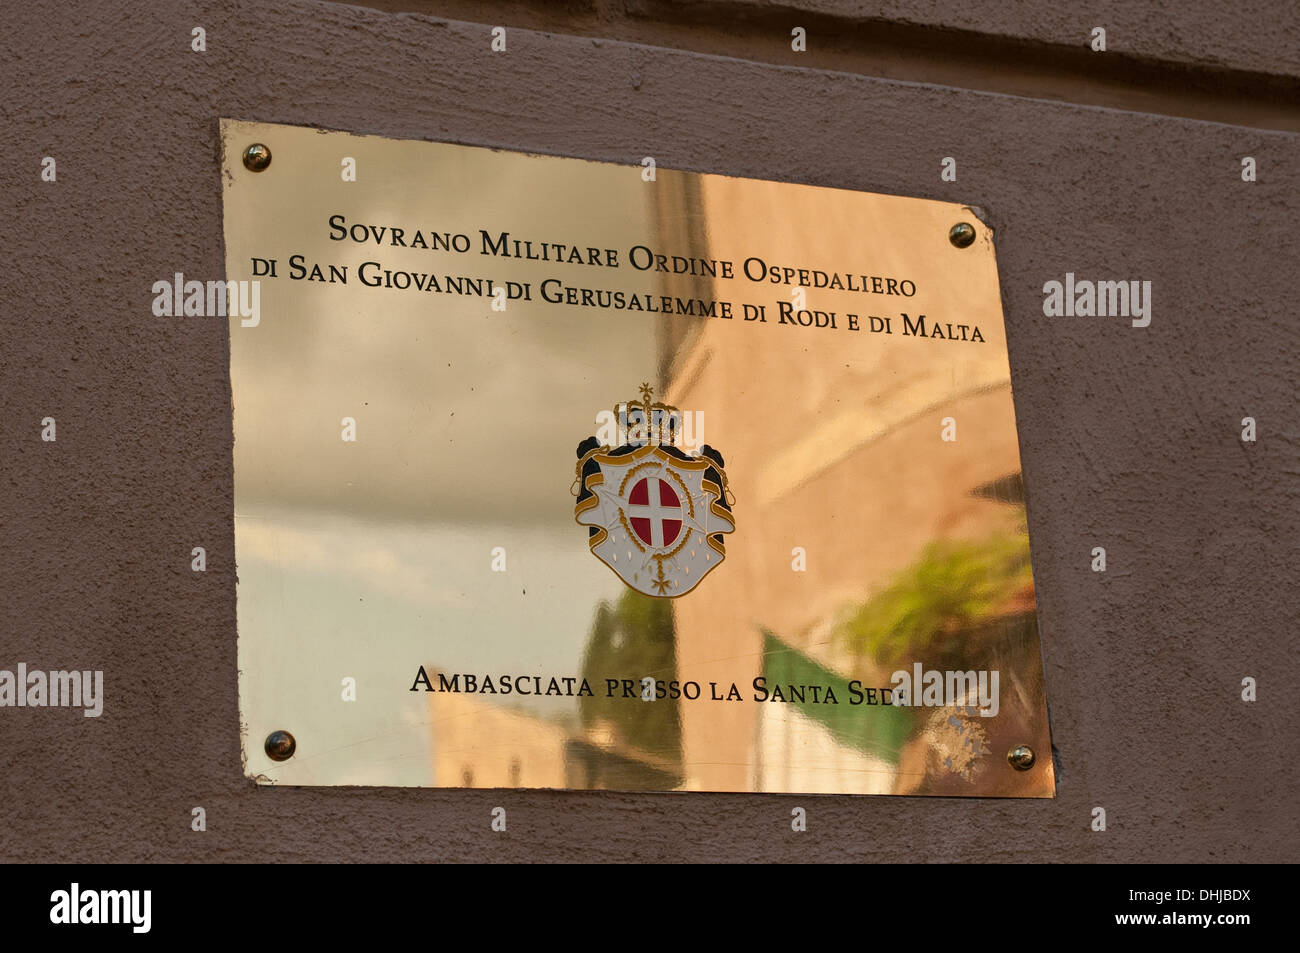 Embassy of Sovereign Military Order of Malta, Rome, Italy Stock Photo